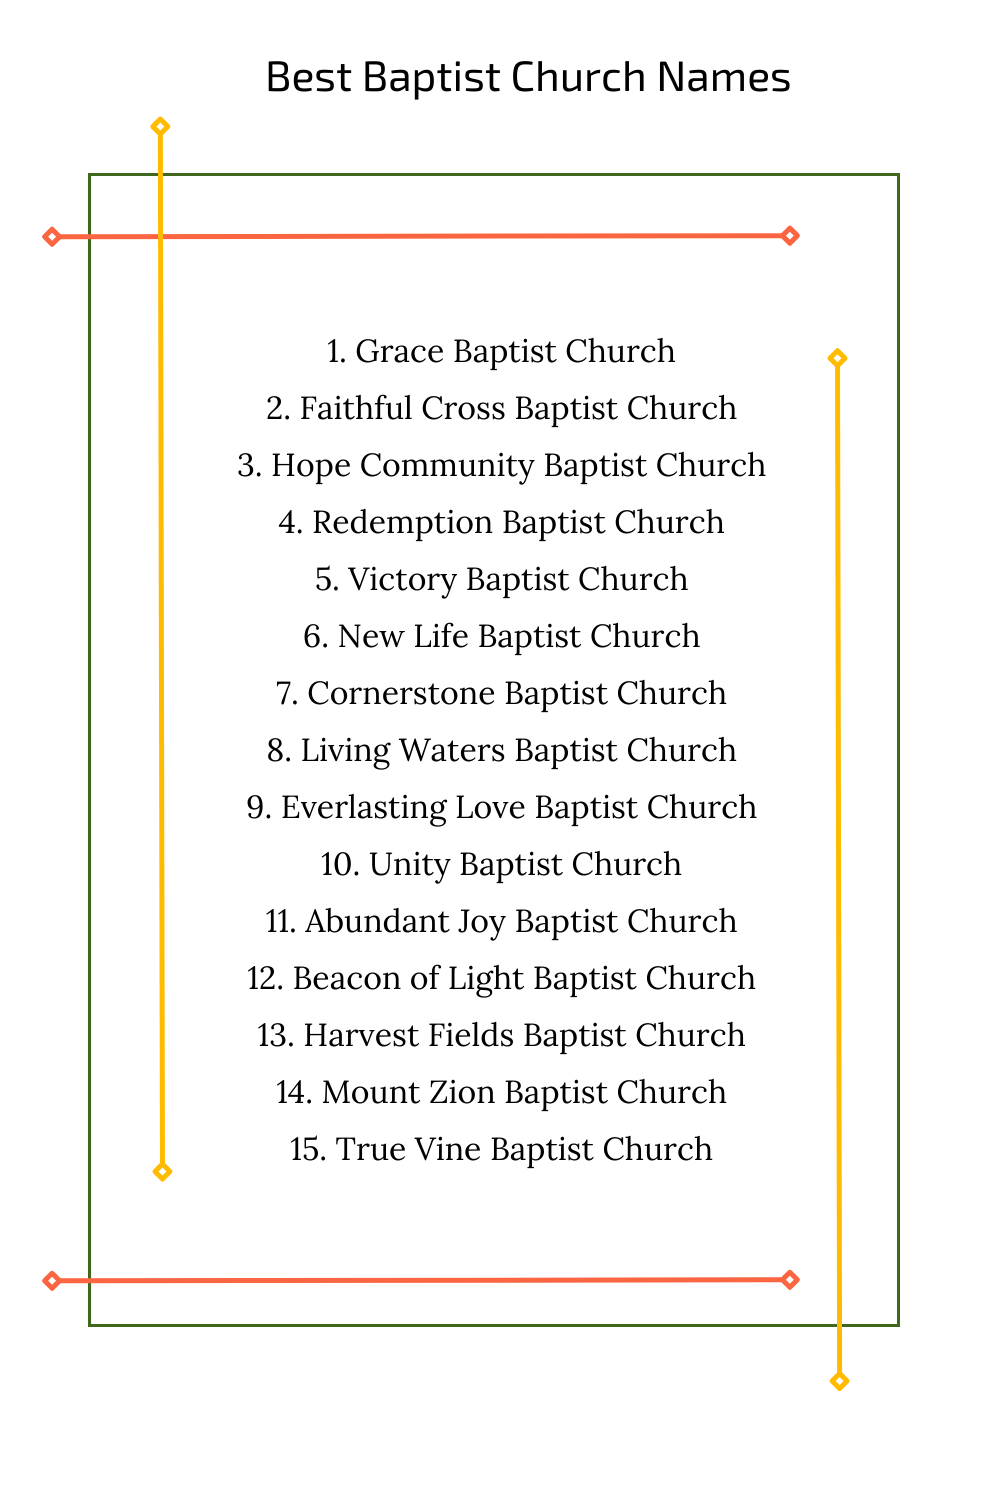 Best Baptist Church Names